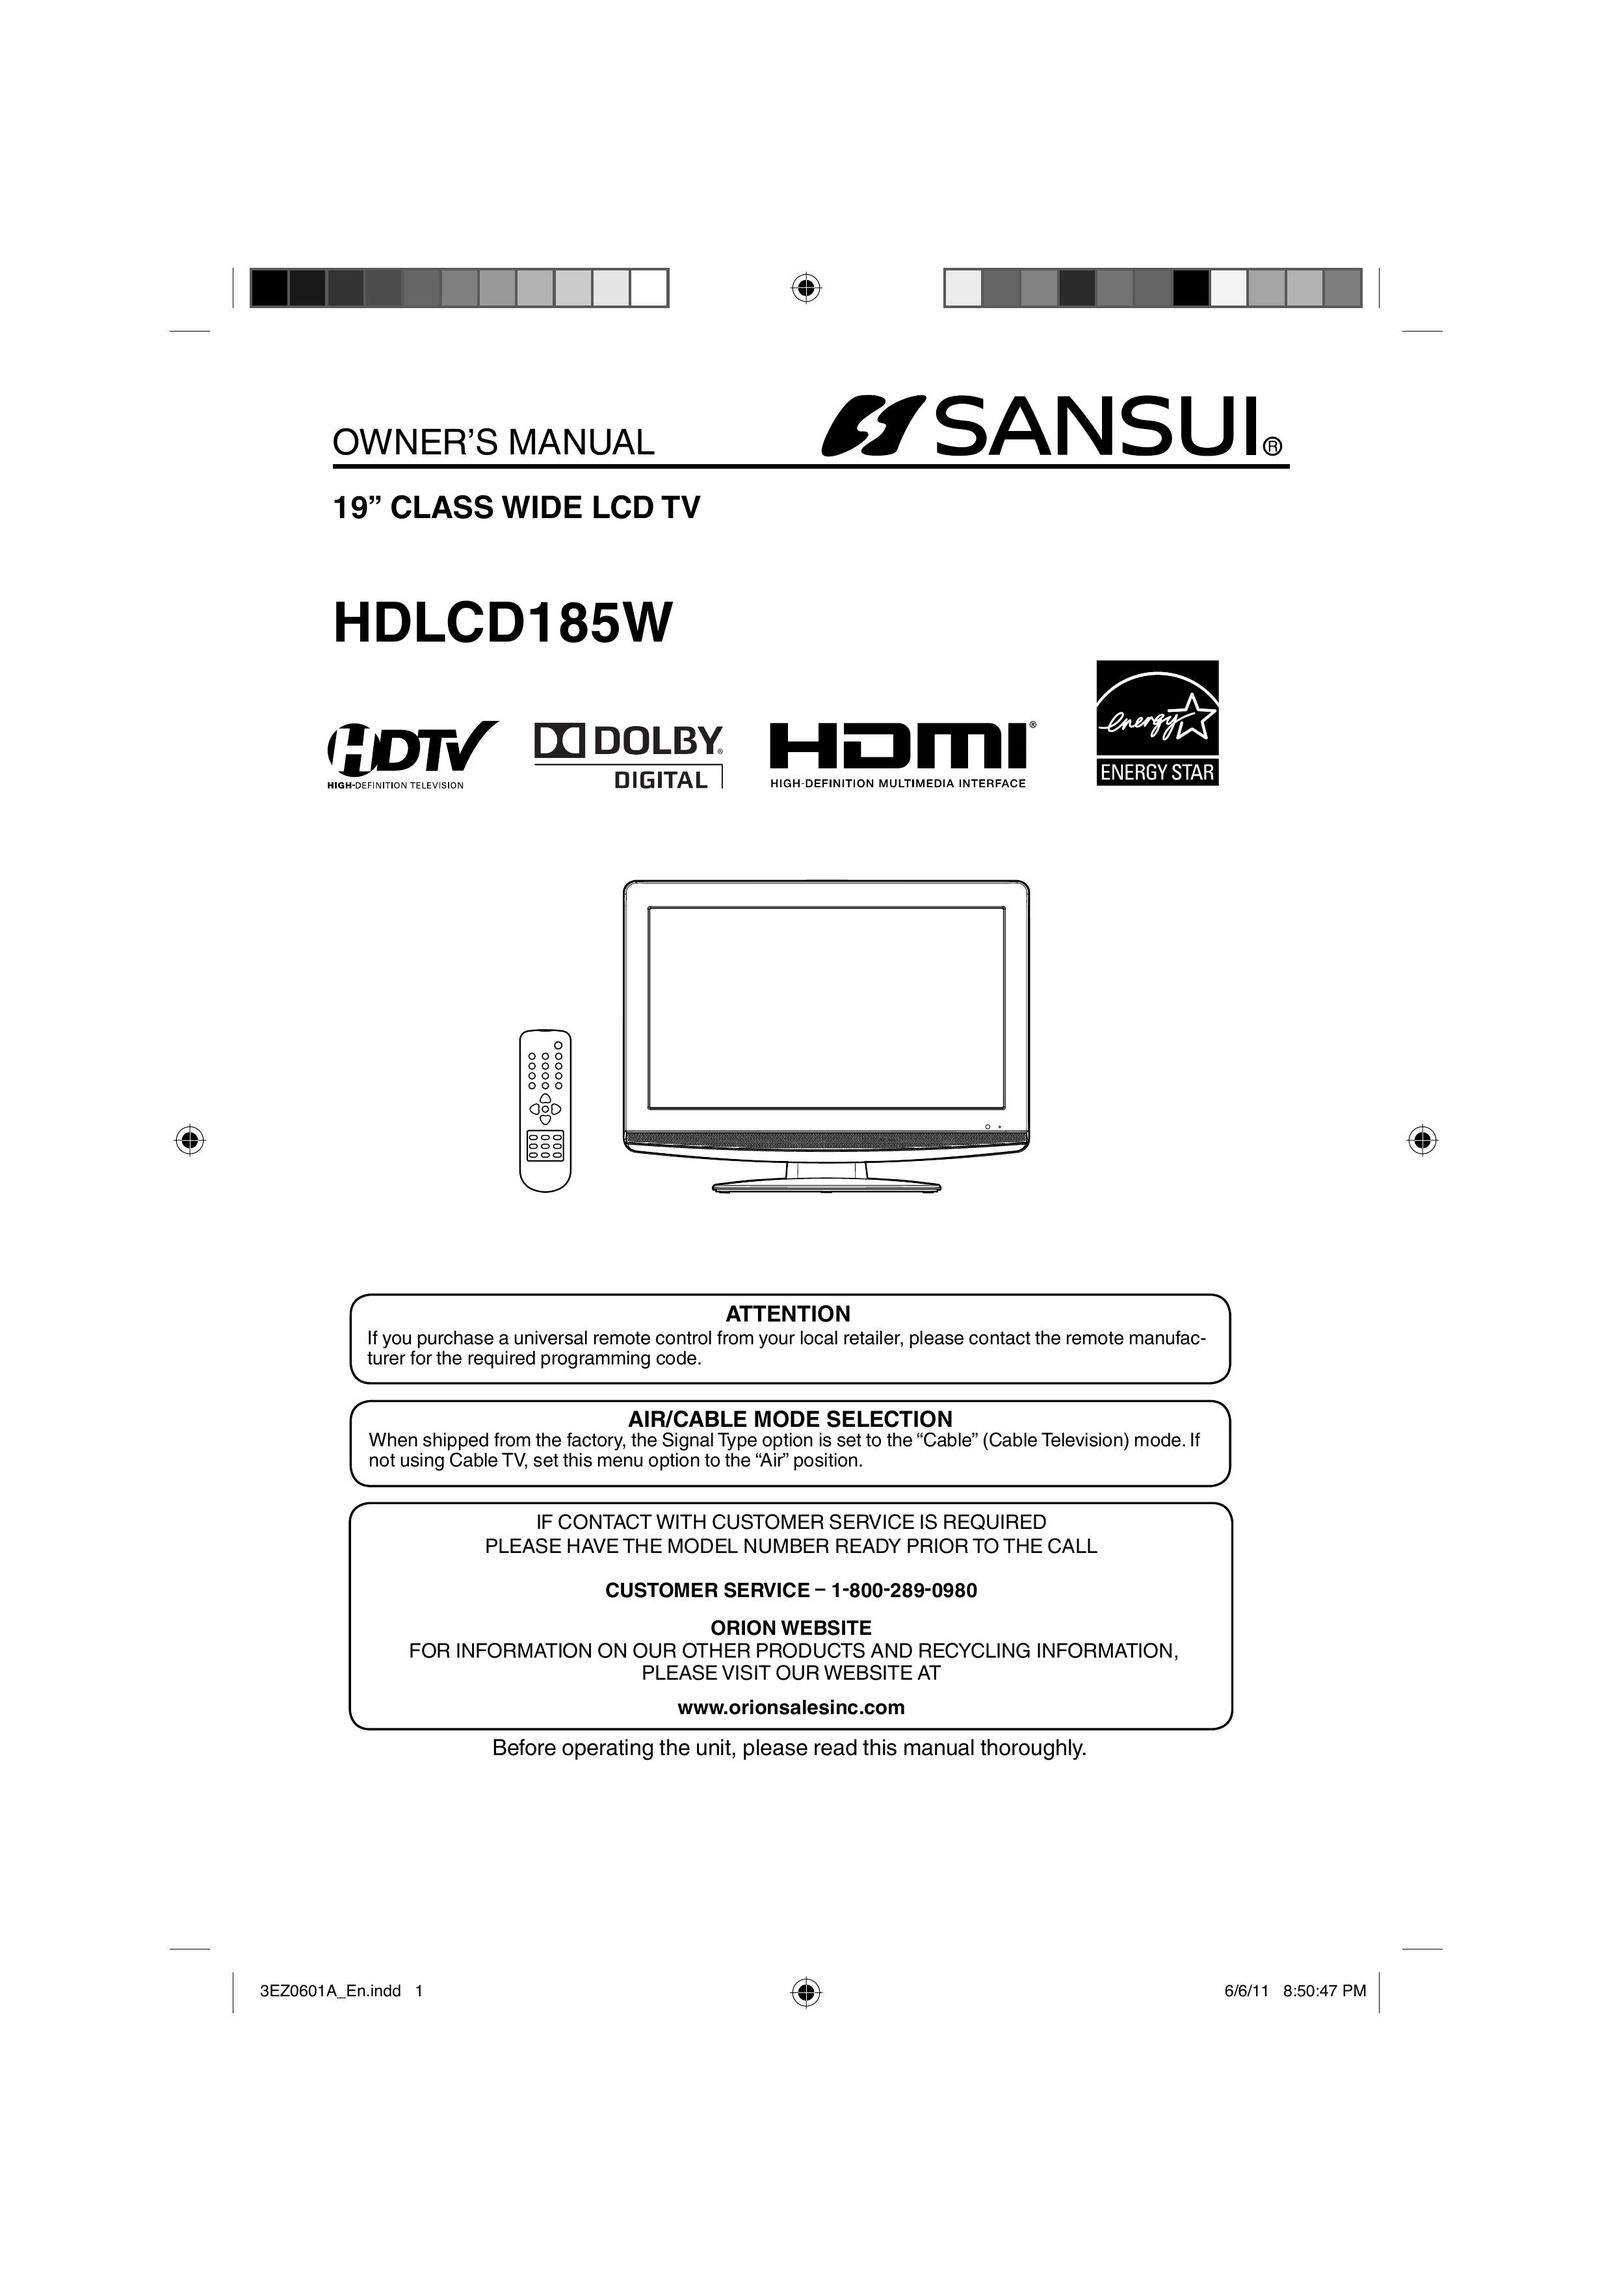 Sansui HDLCD185W Flat Panel Television User Manual